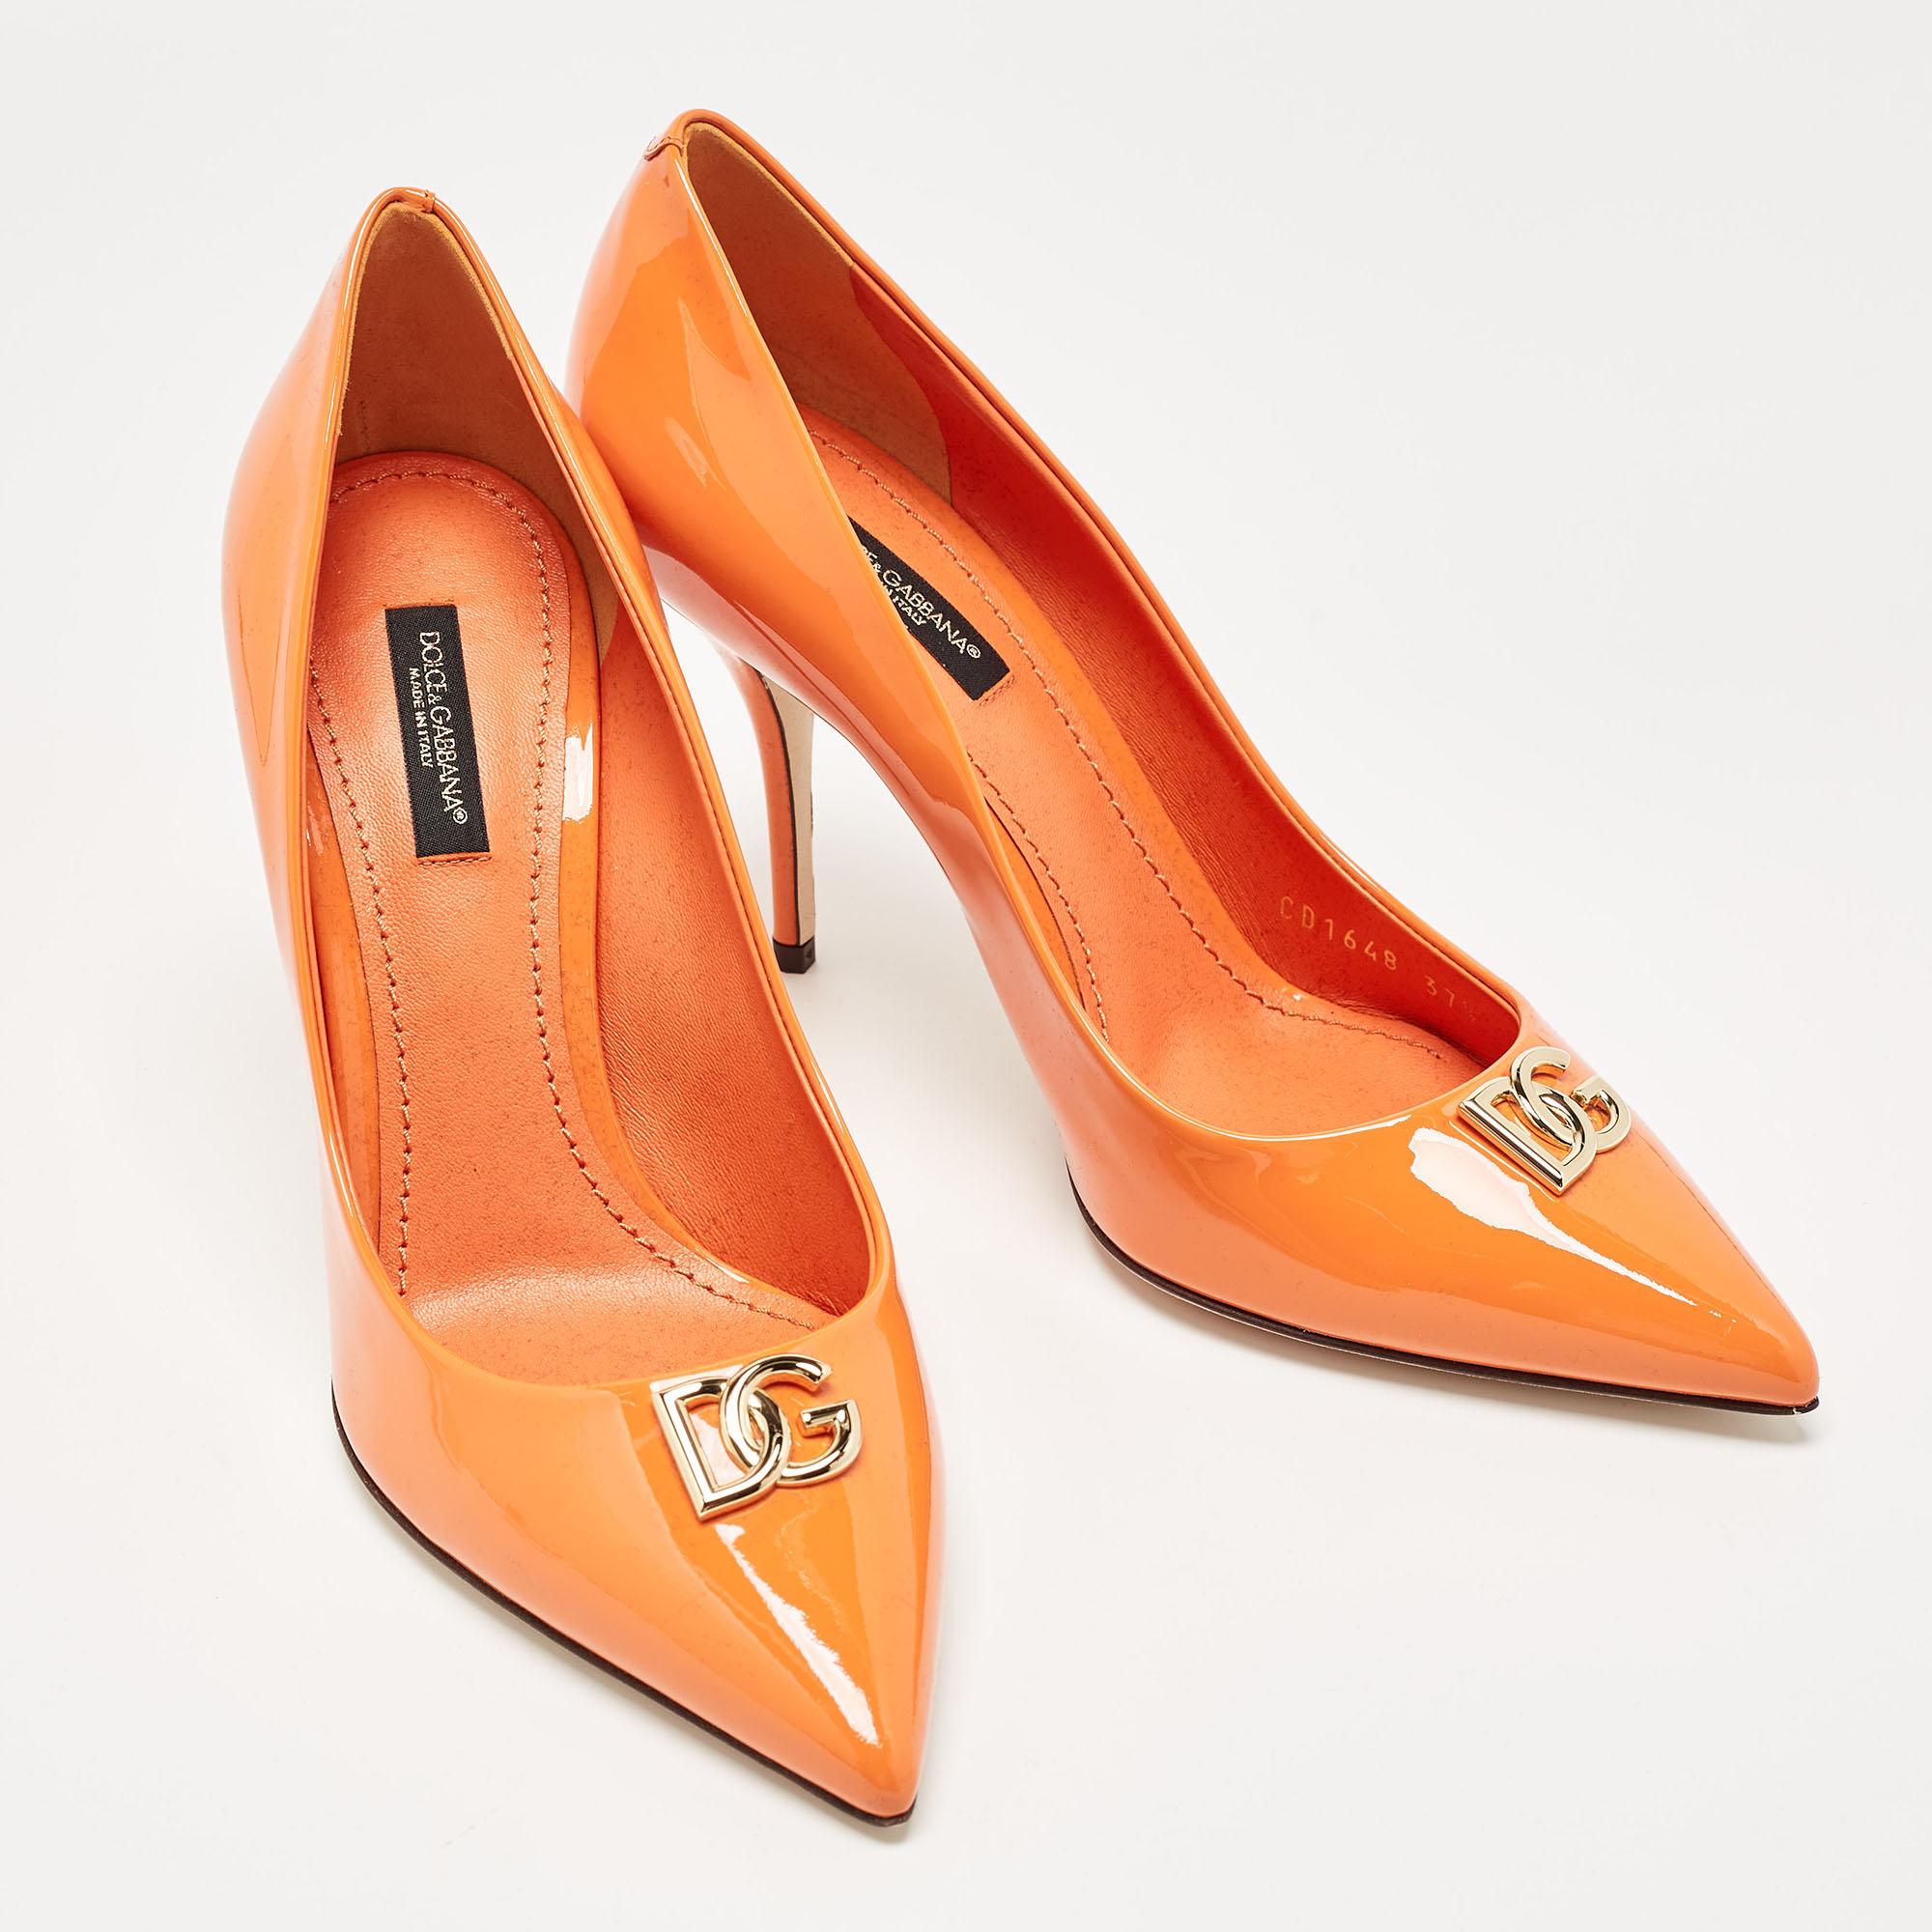 Dolce & Gabbana Orange Patent Leather DG Buckle Pumps Size 37.5 In Good Condition For Sale In Dubai, Al Qouz 2